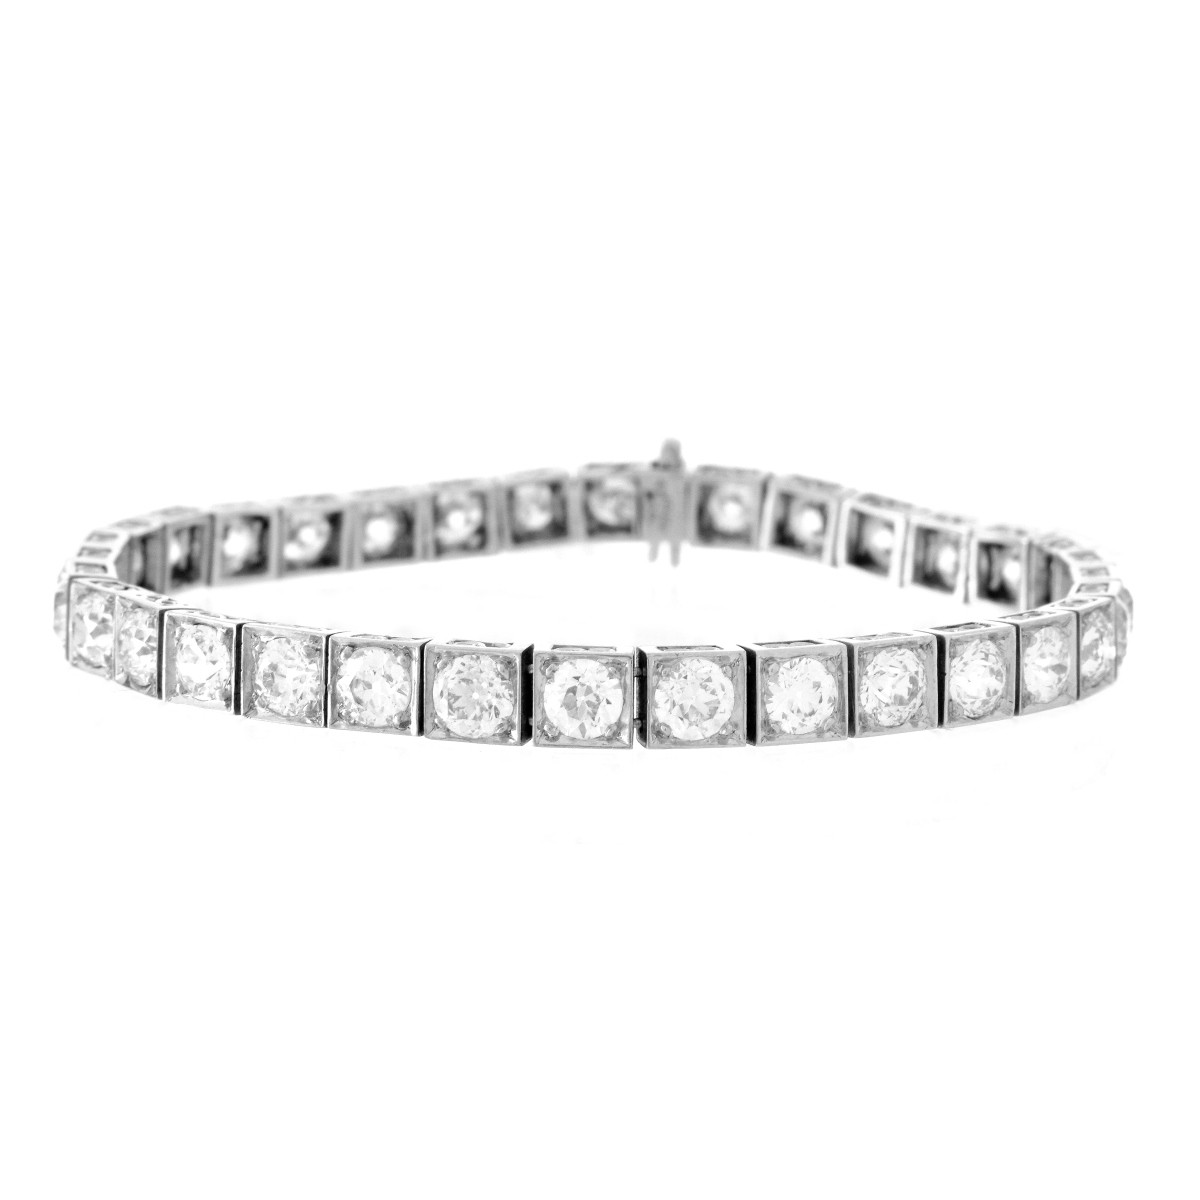 Tiffany & Co. Diamond and Platinum Bracelet